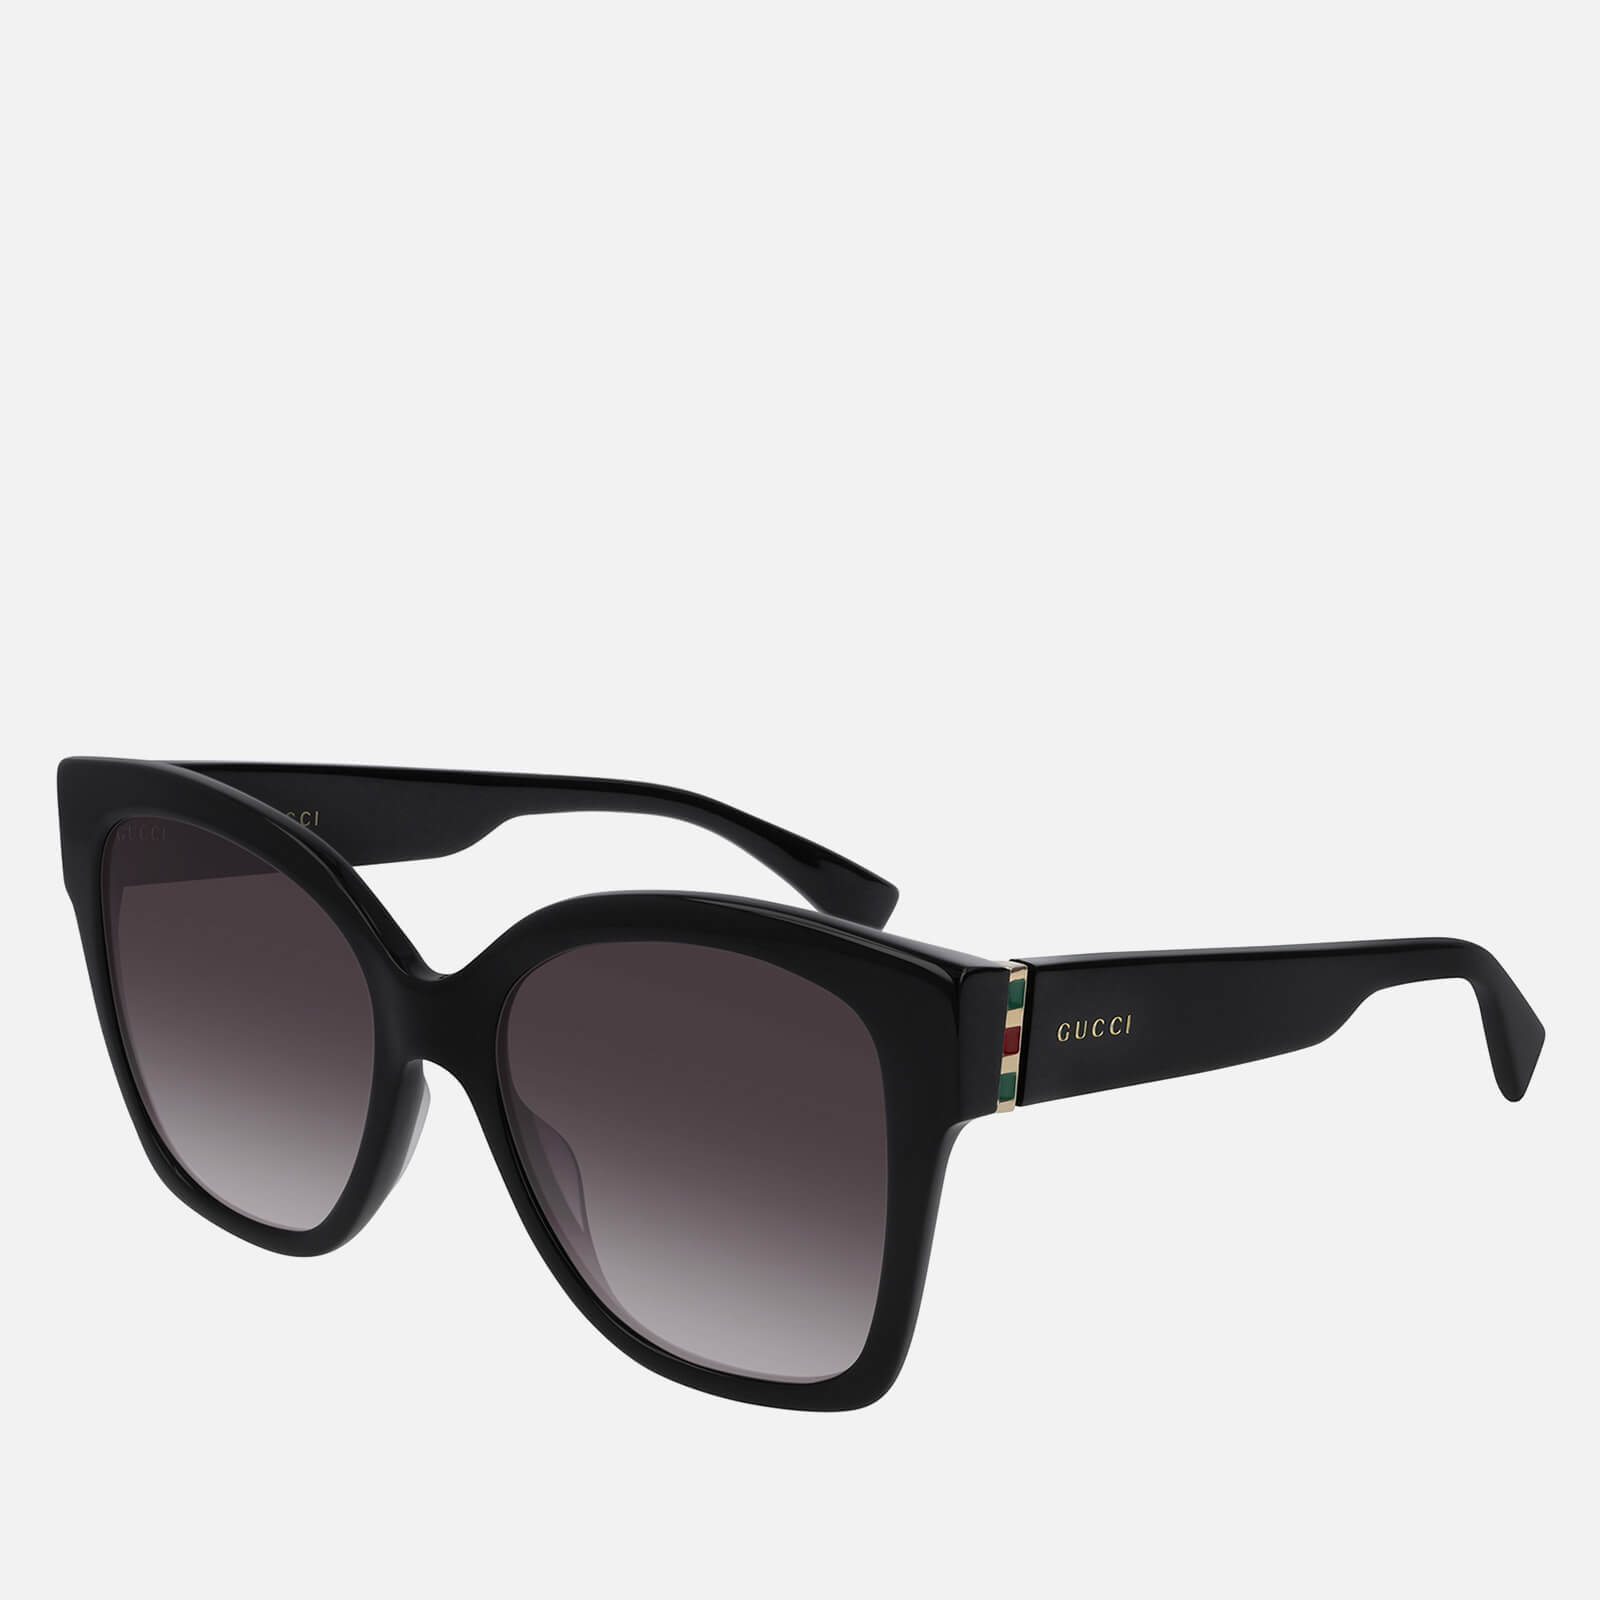 Gucci Large Square Acetate Sunglasses